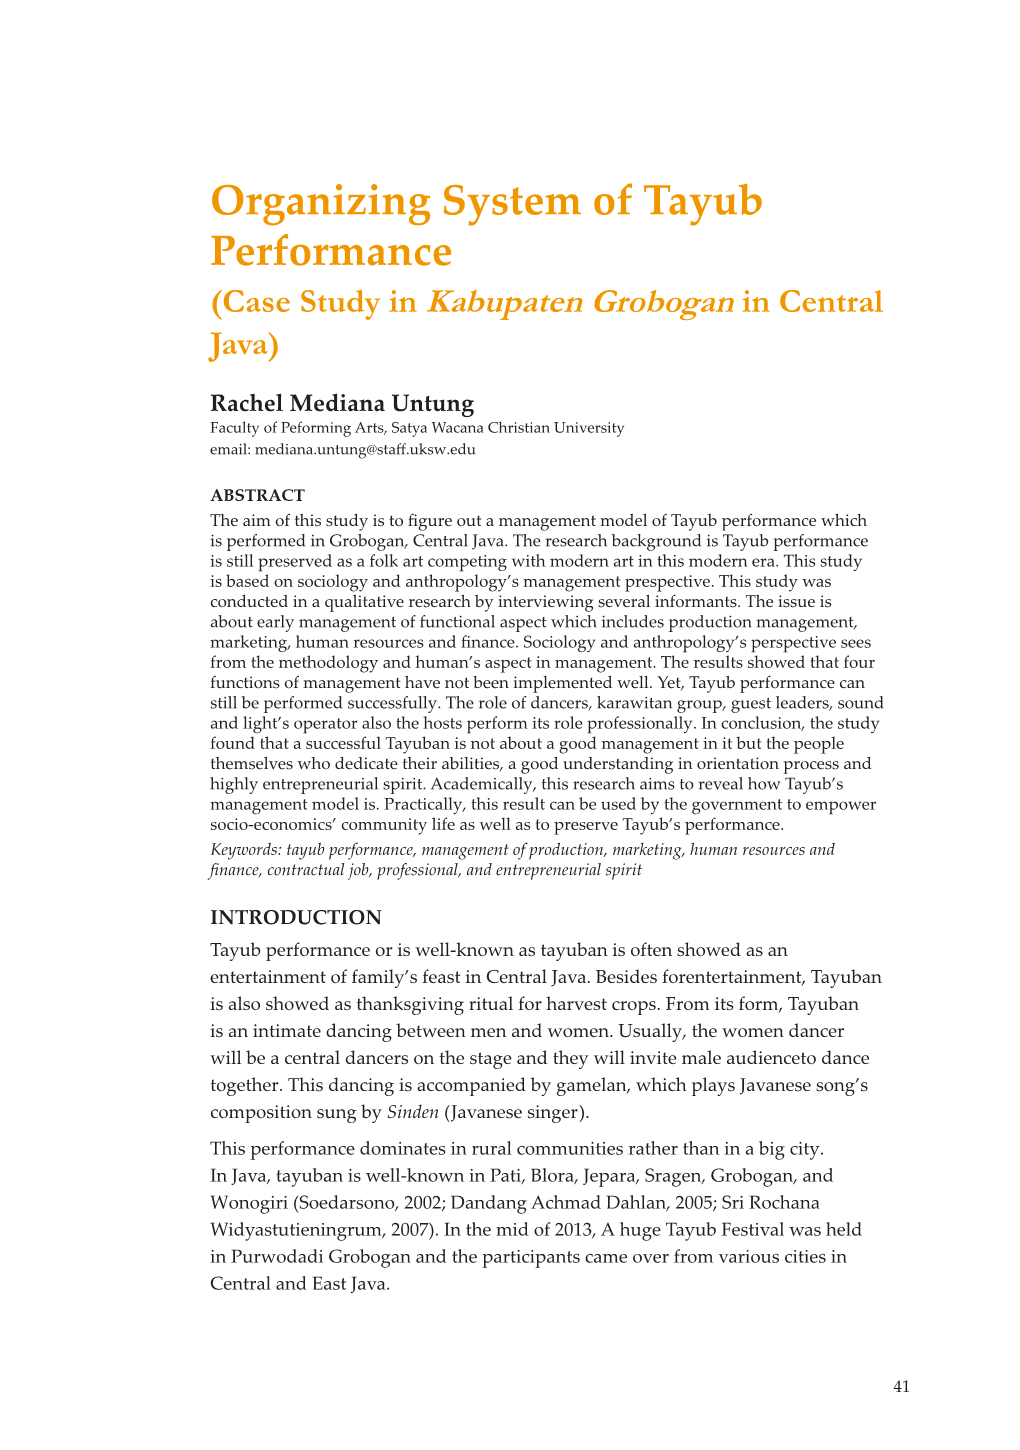 Organizing System of Tayub Performance (Case Study in Kabupaten Grobogan in Central Java)